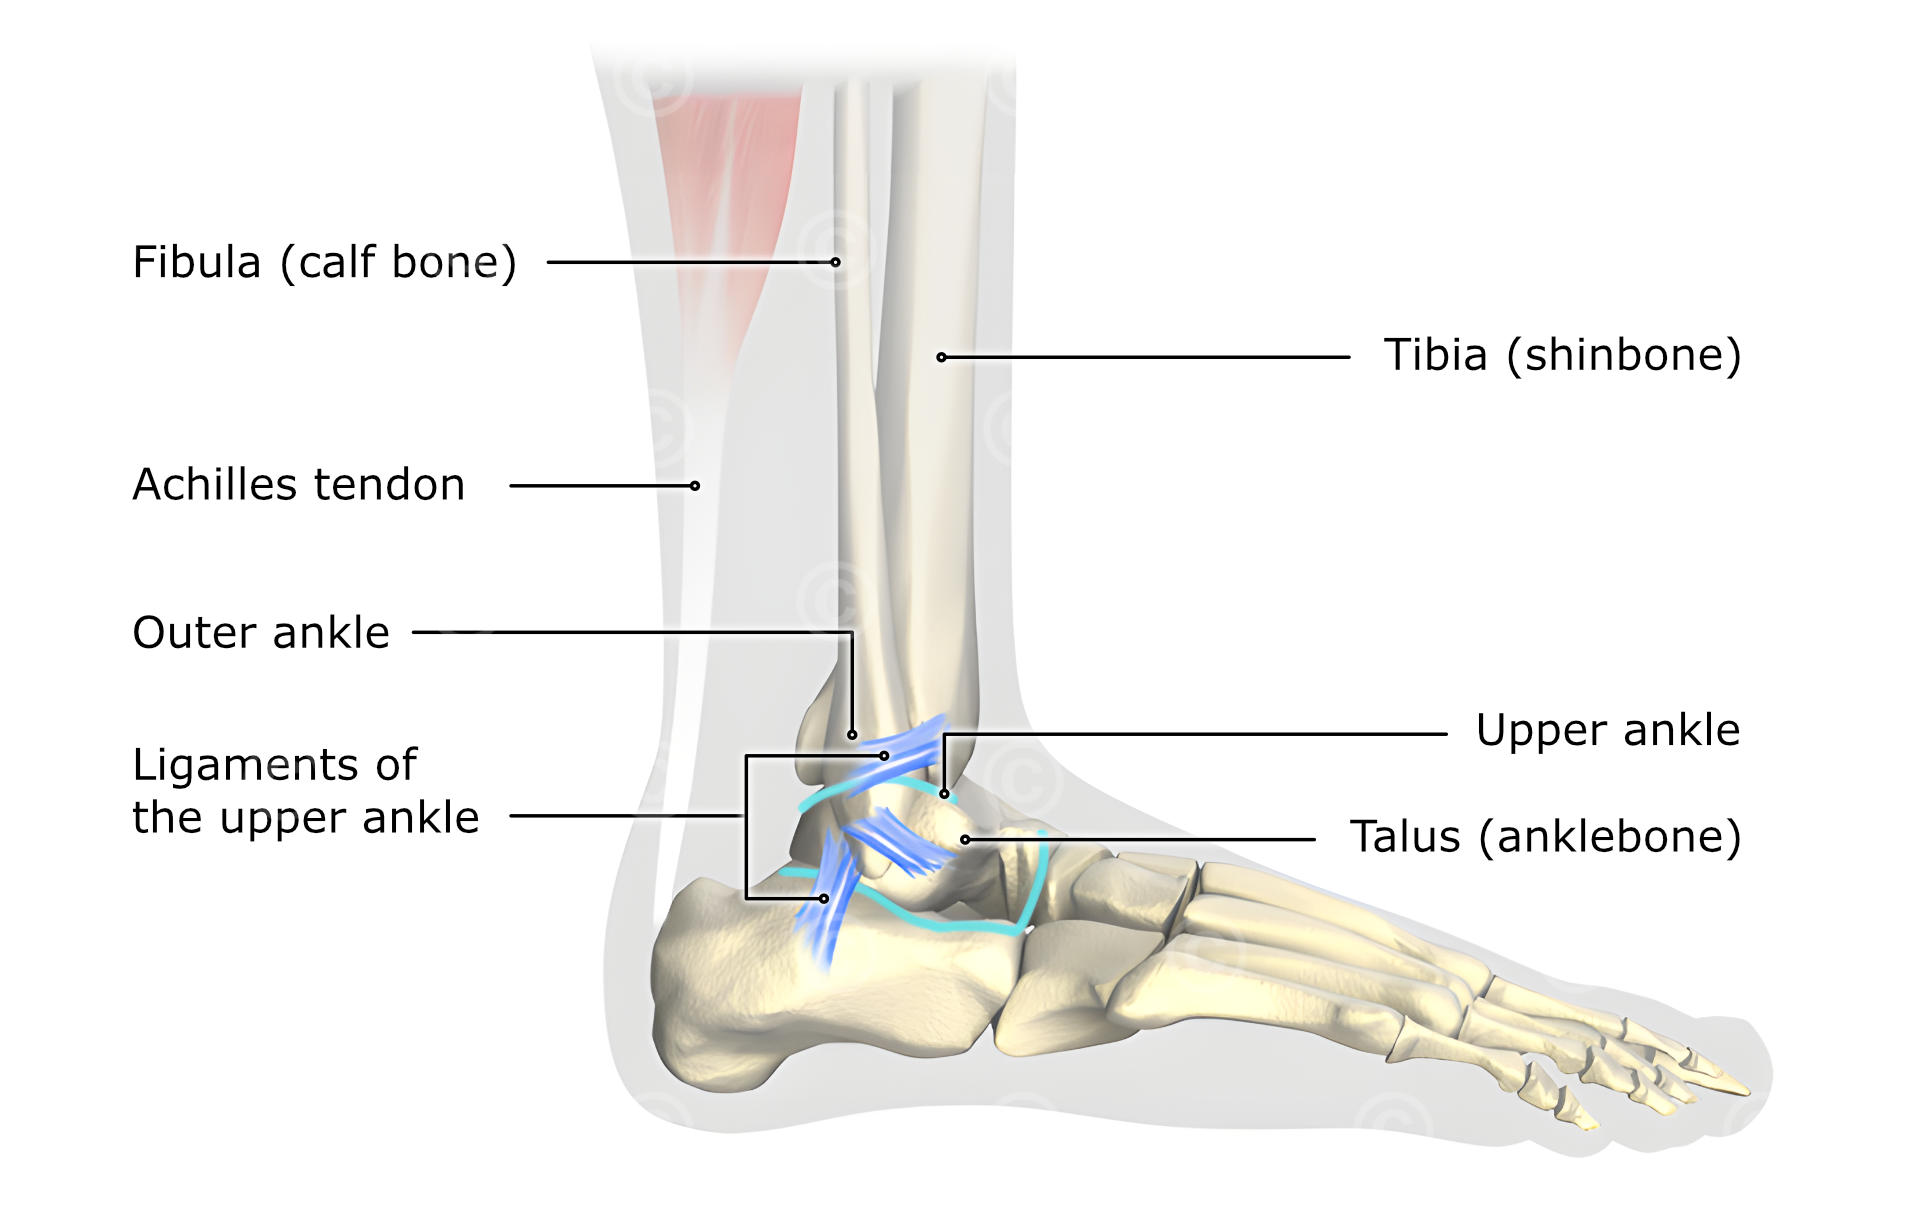 https://www.medicalgraphics.de/wp-content/uploads/2014/04/ankle-injury-big.jpg